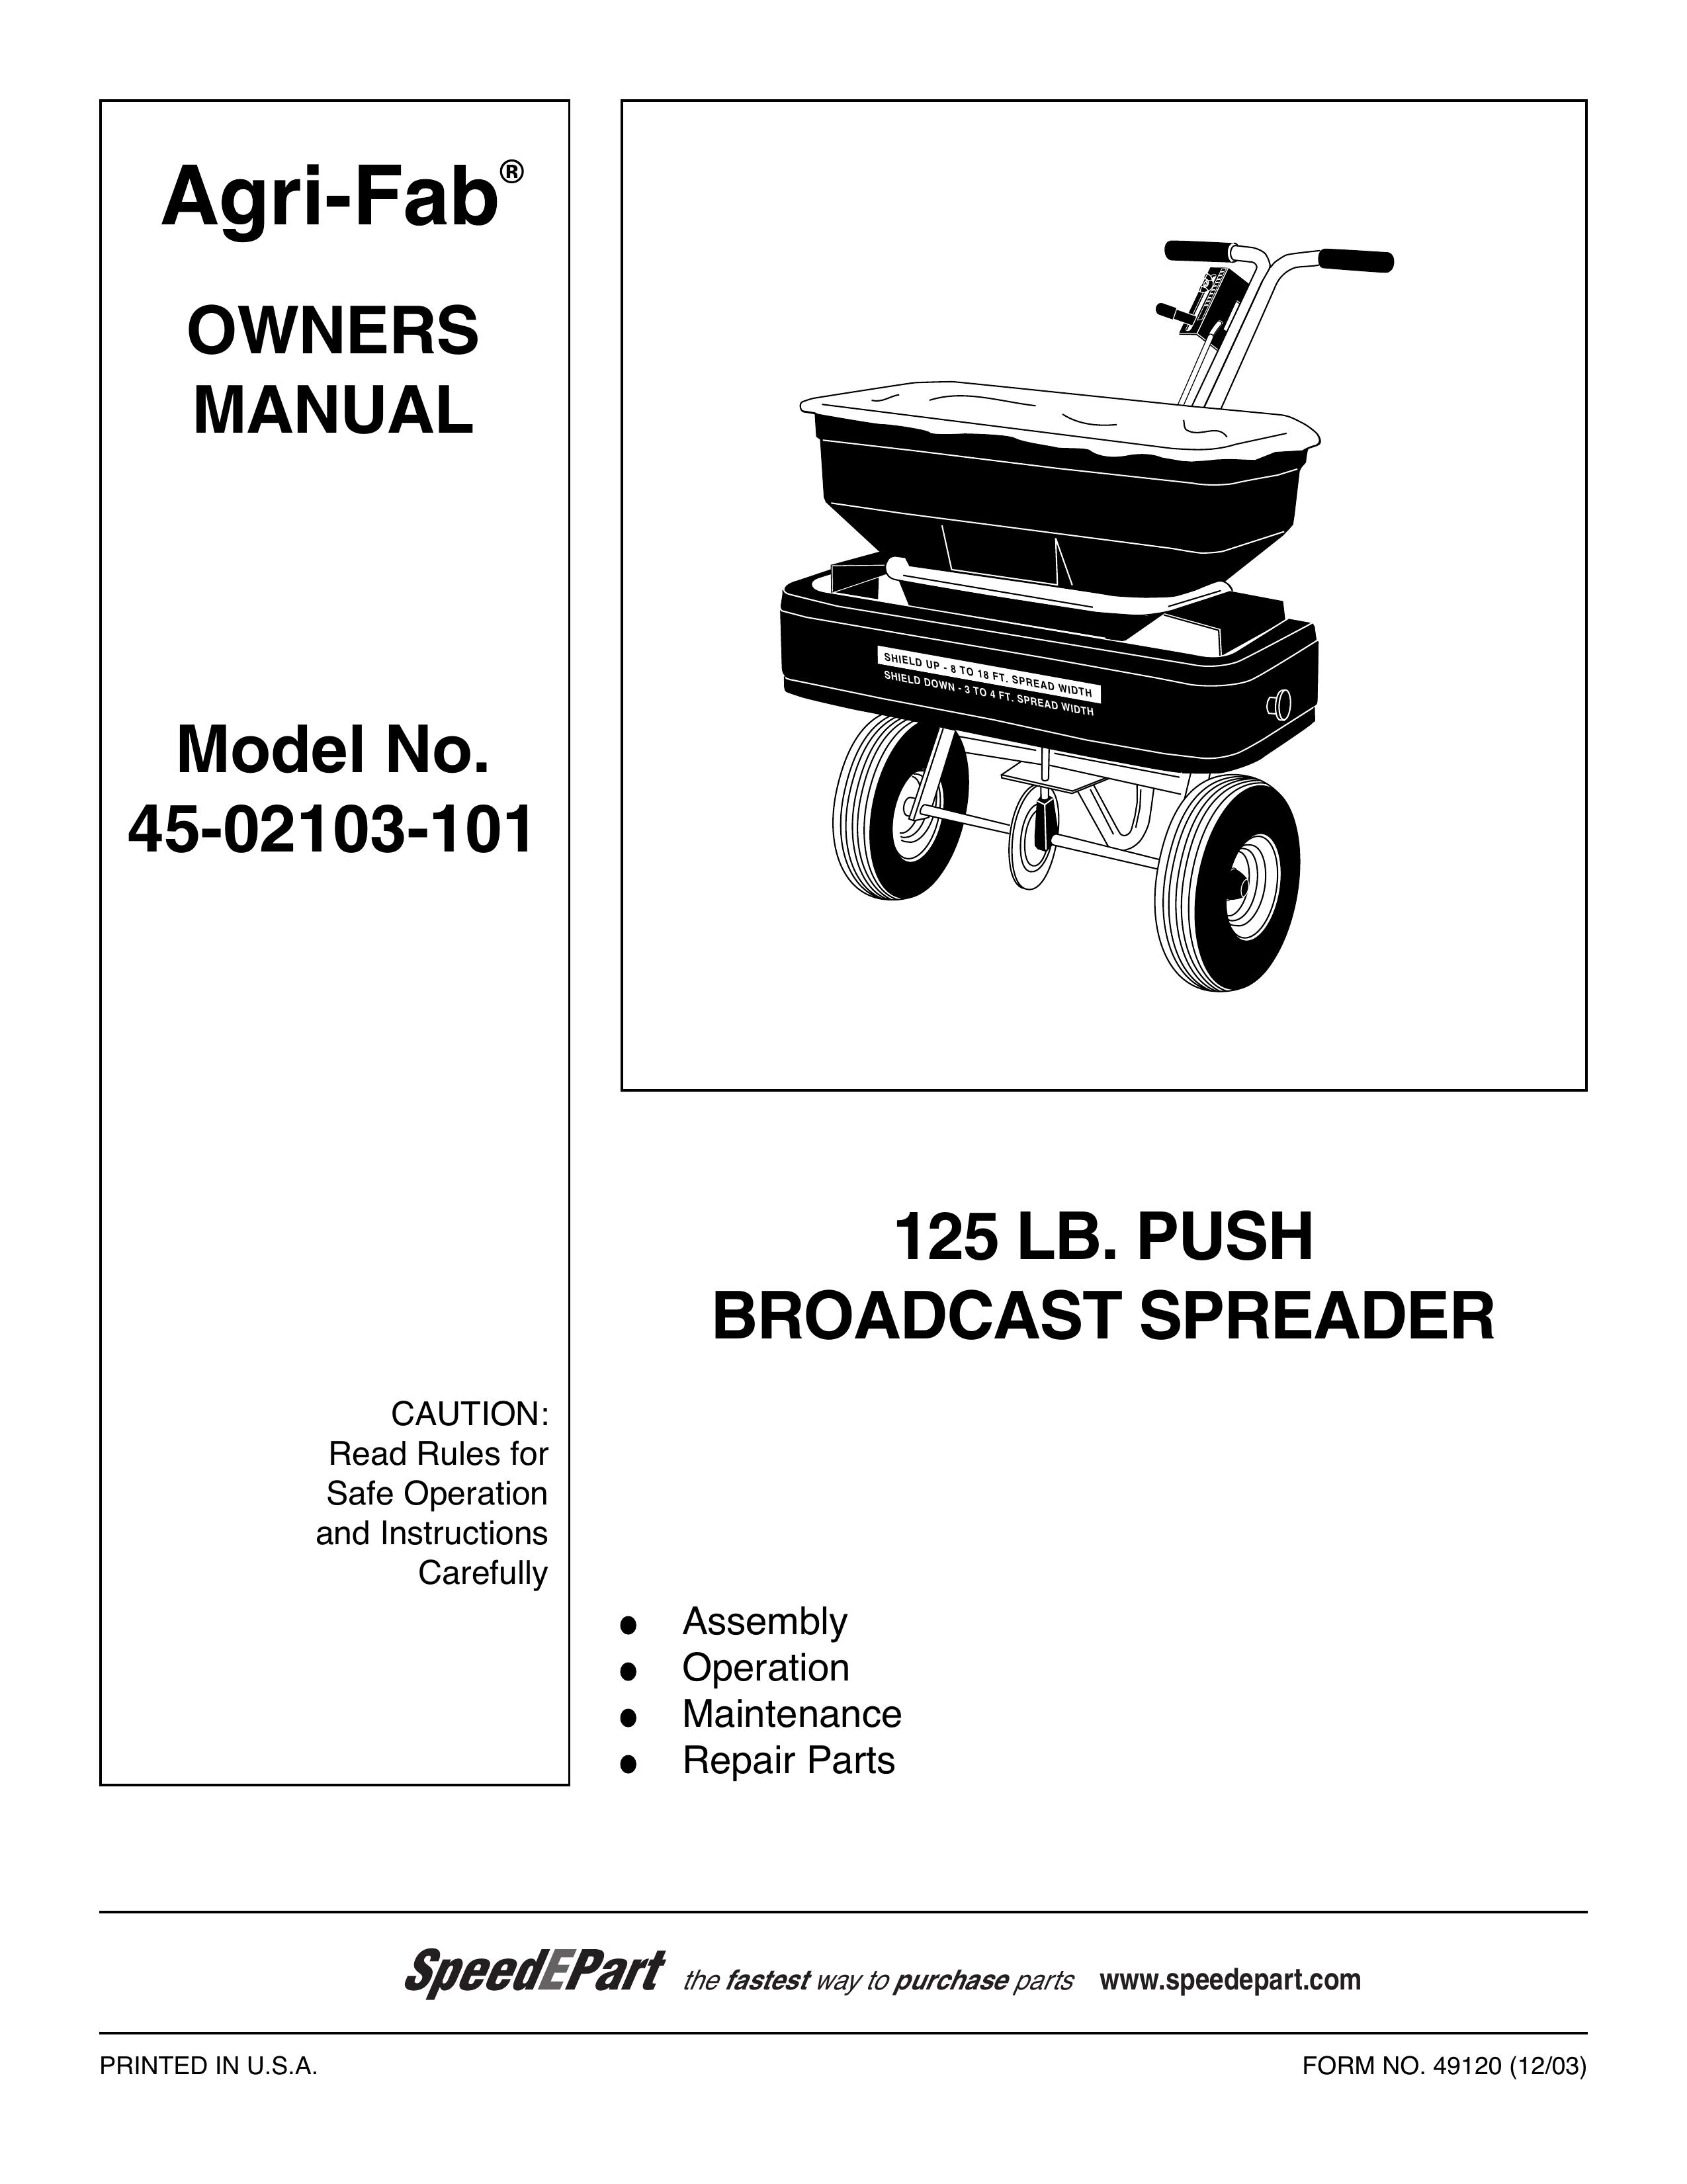 Agri-Fab 45-02103-101 Spreader User Manual